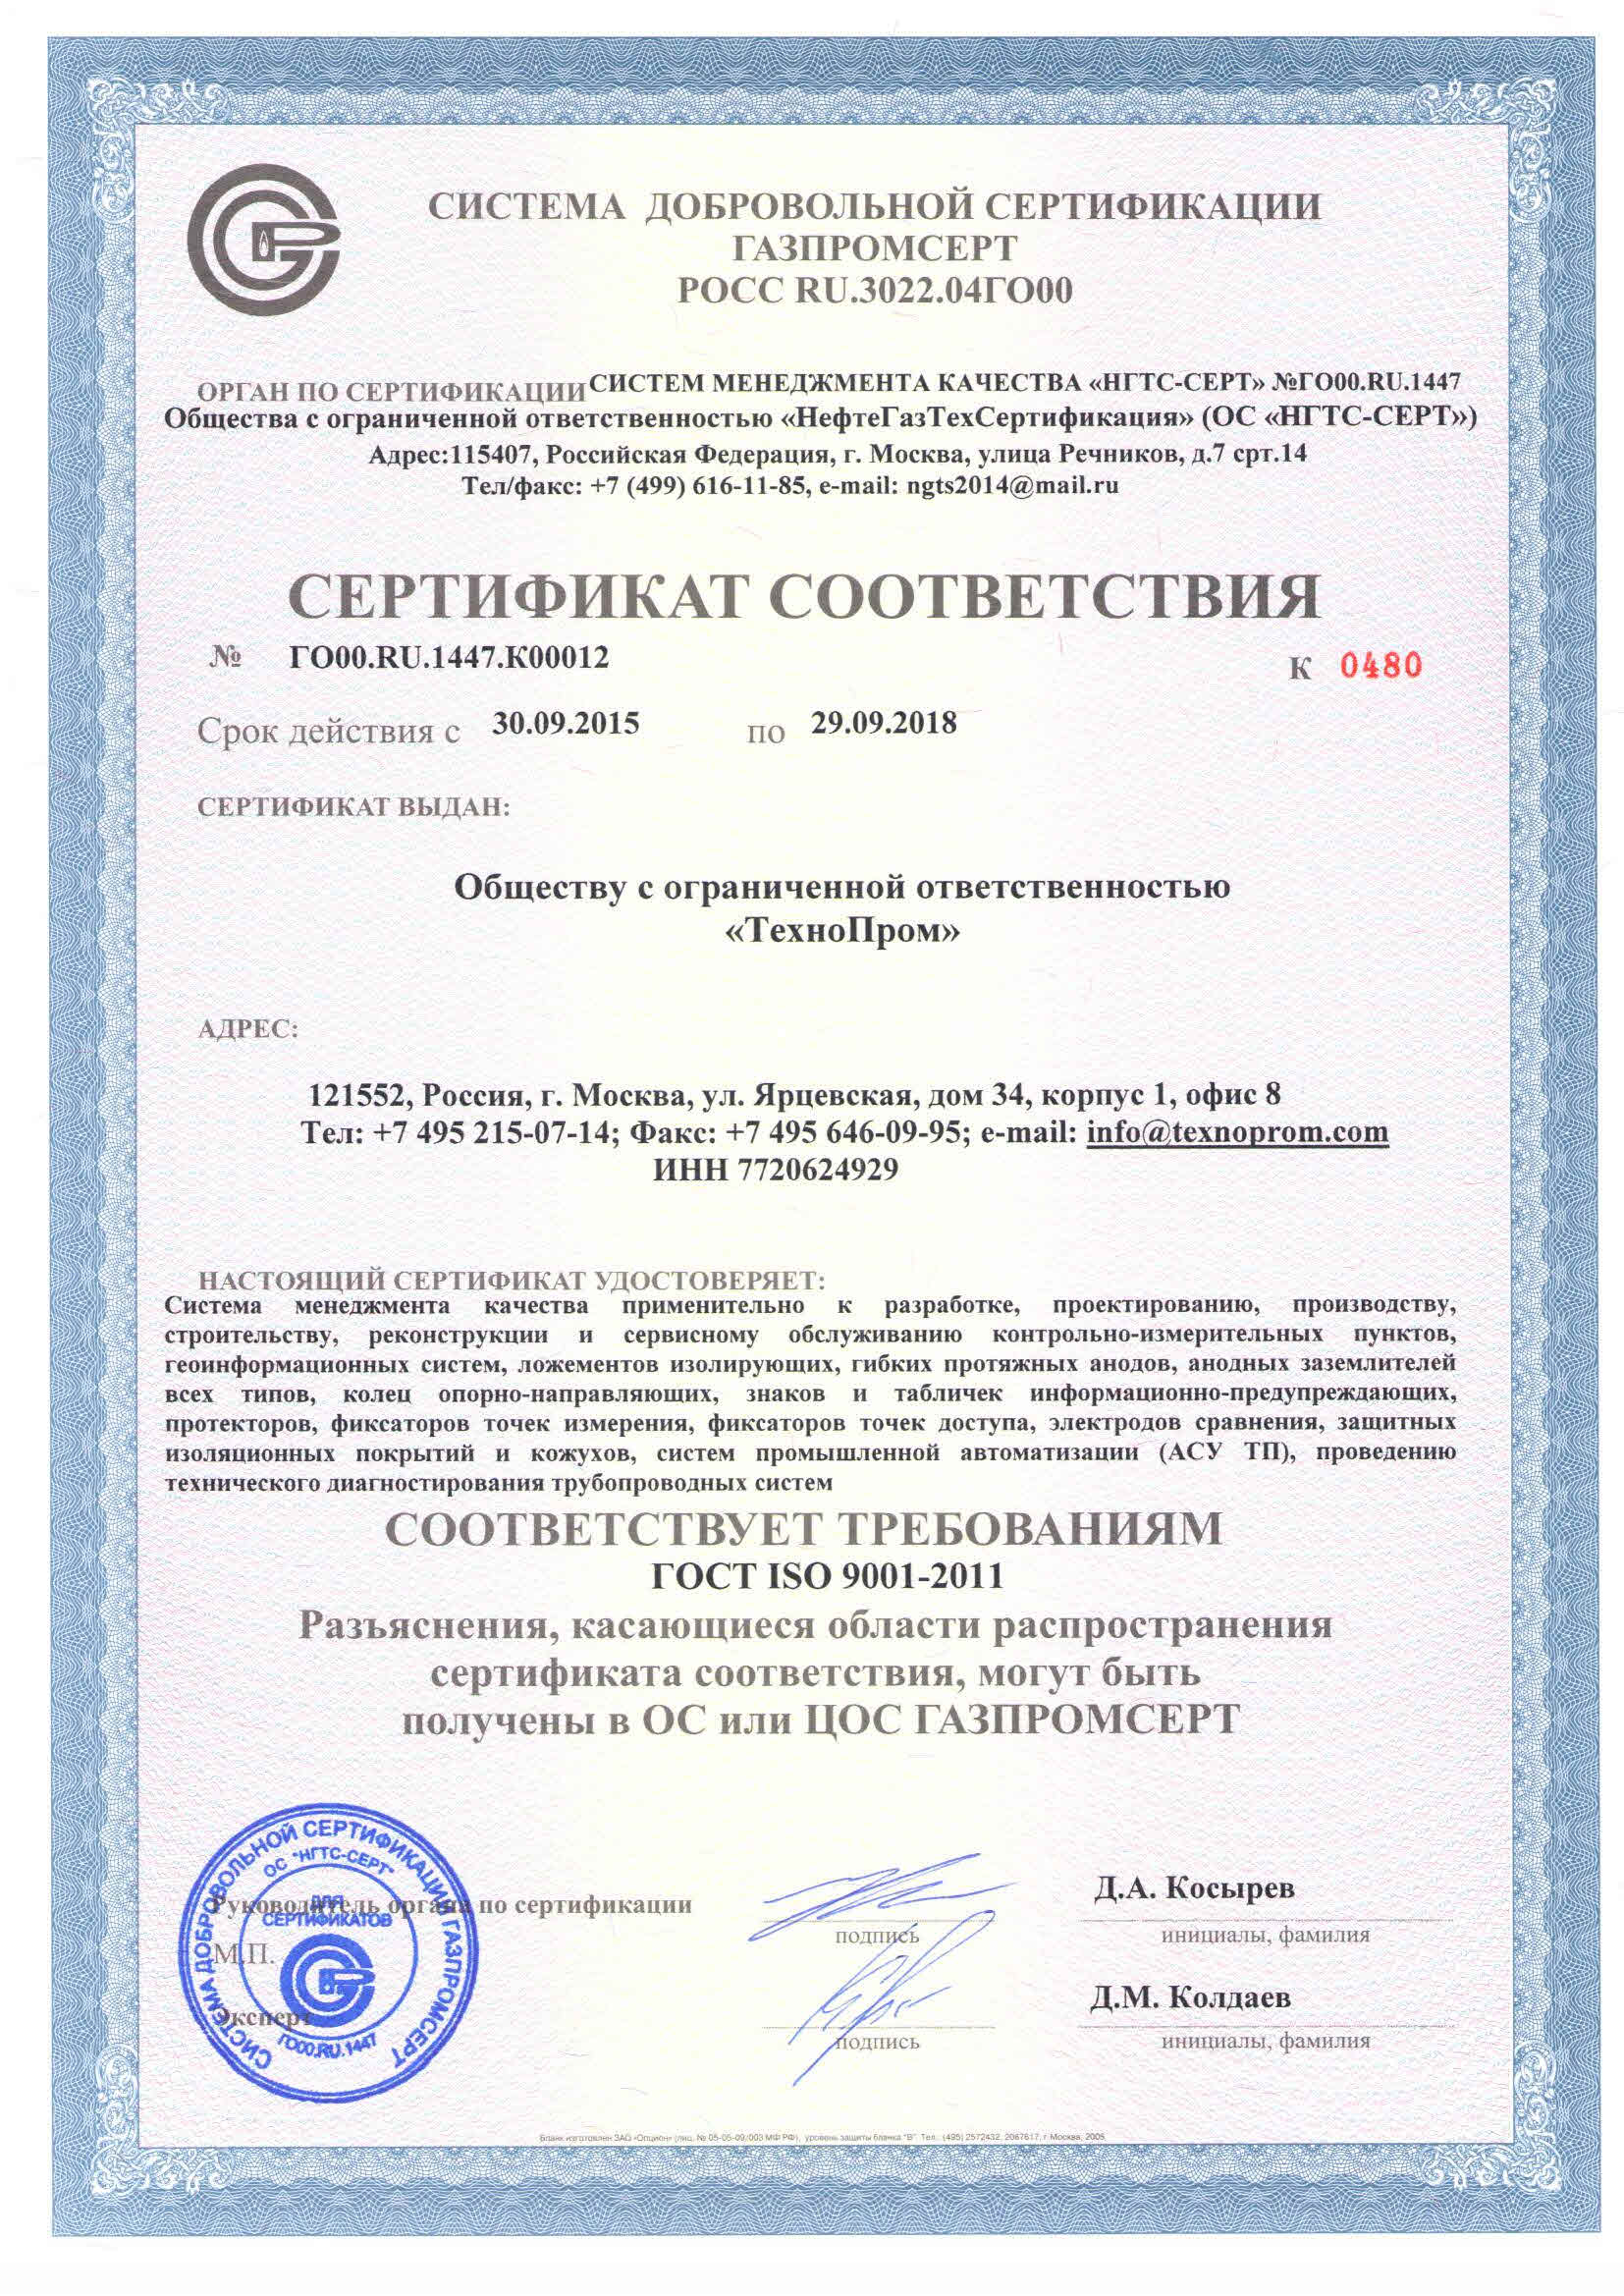 Сертификат соответствия название и описание сертификата1